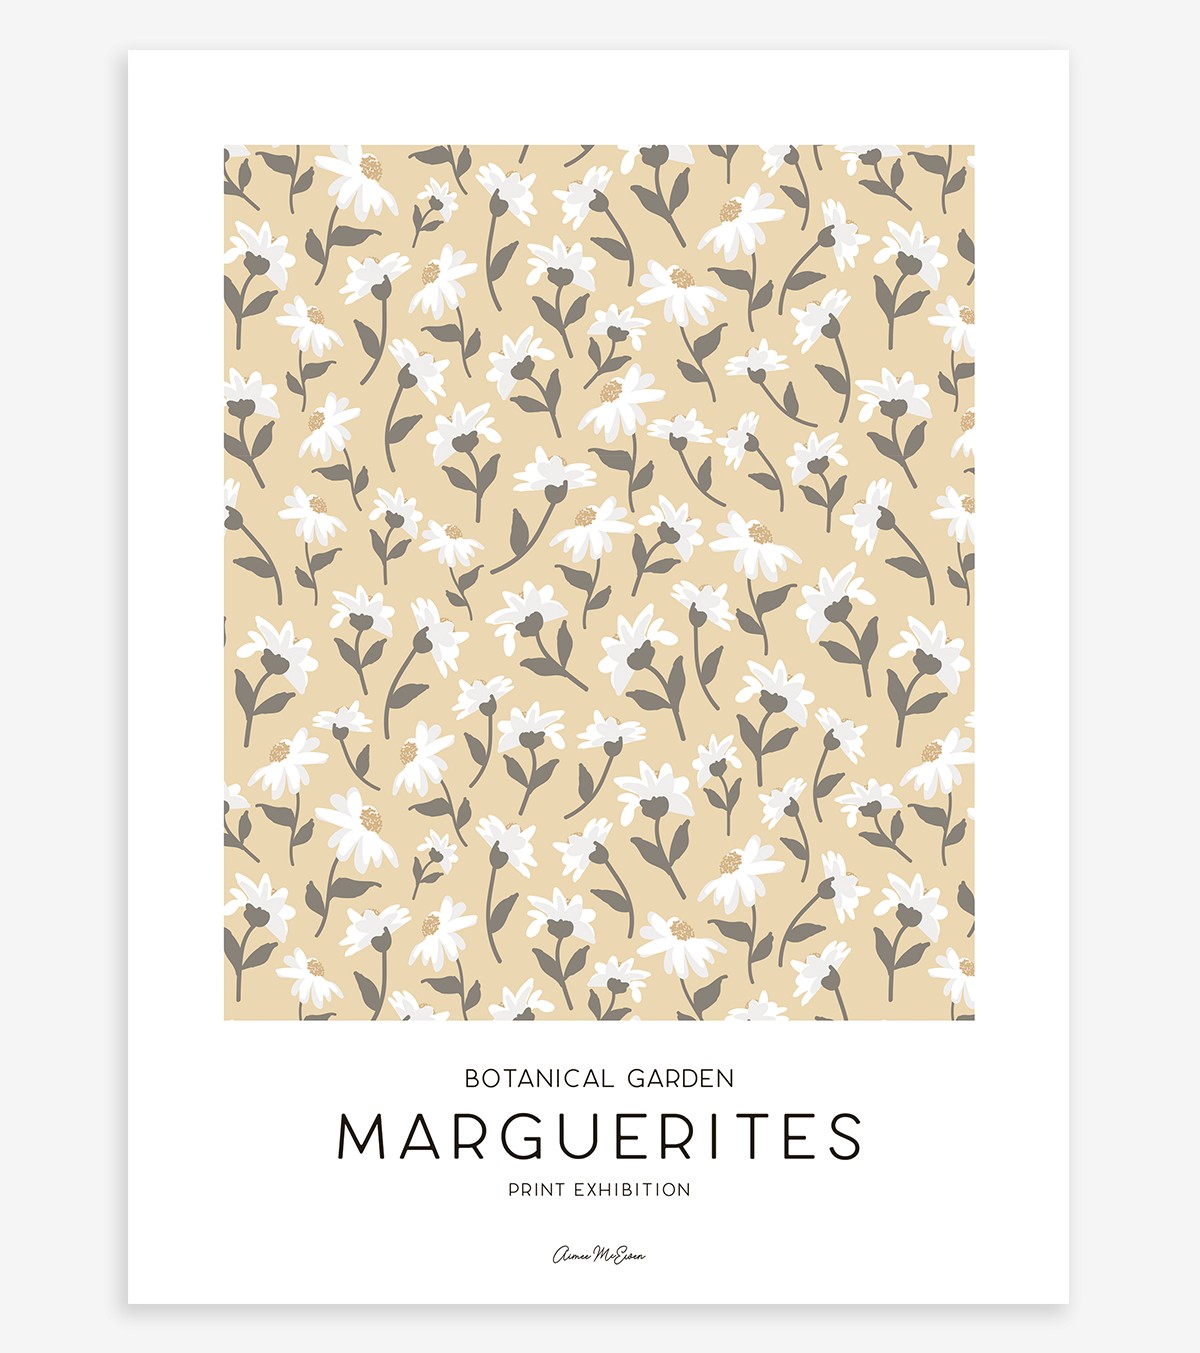 PICNIC DAY - Affiche enfant - Marguerites (moutarde)